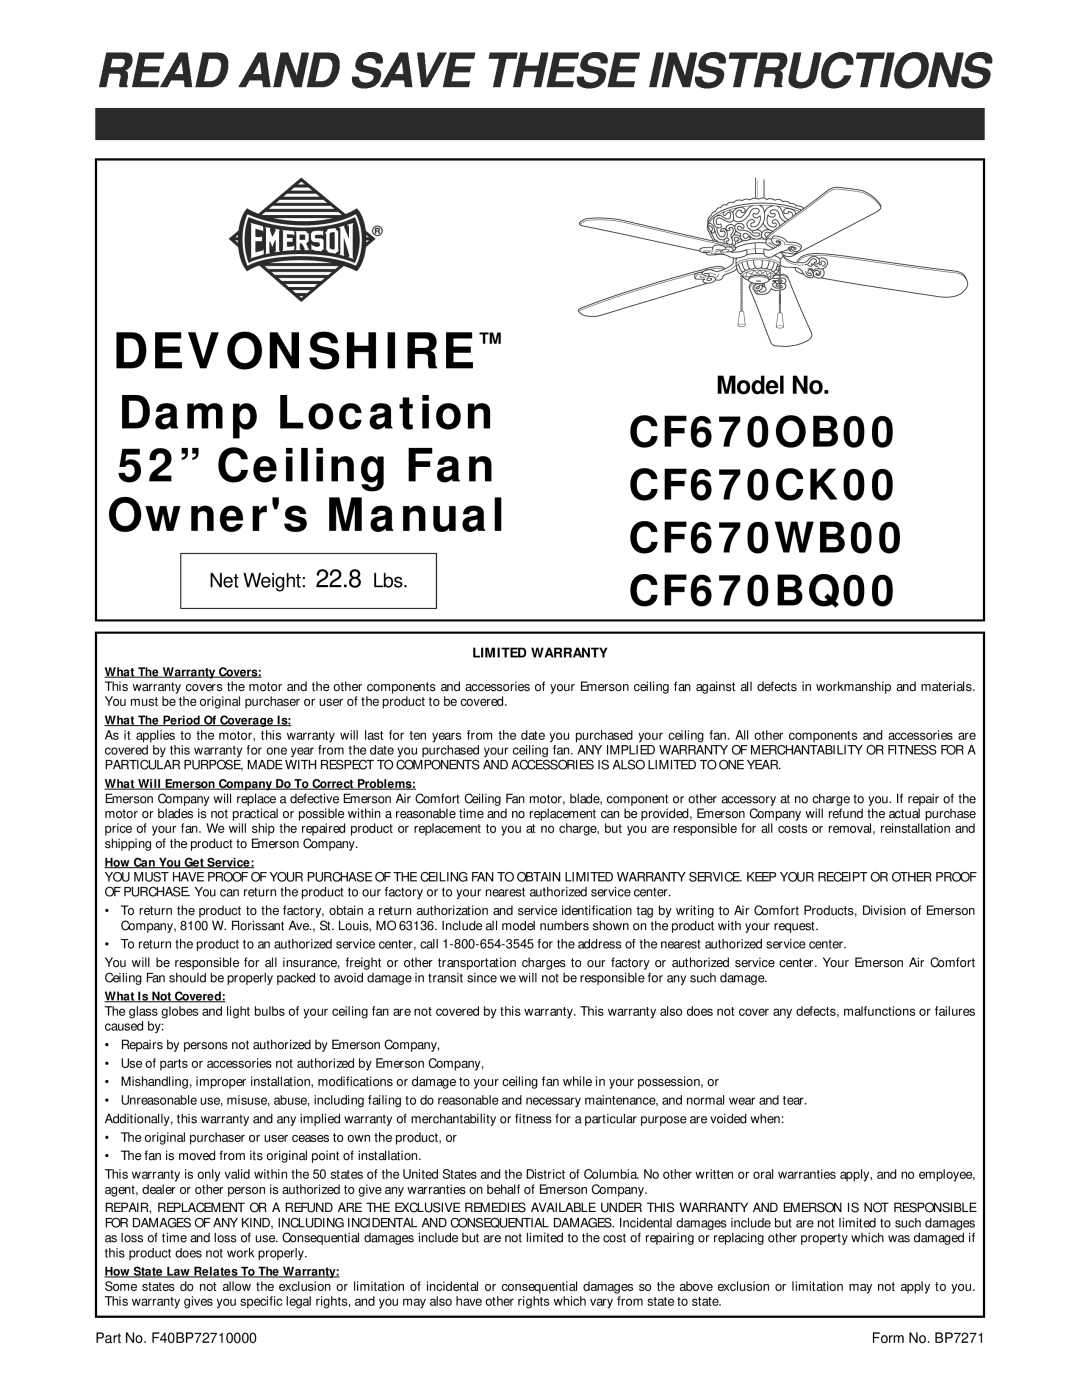 Emerson warranty Model No, Devonshire, Read And Save These Instructions, CF670OB00 CF670CK00 CF670WB00, CF670BQ00 